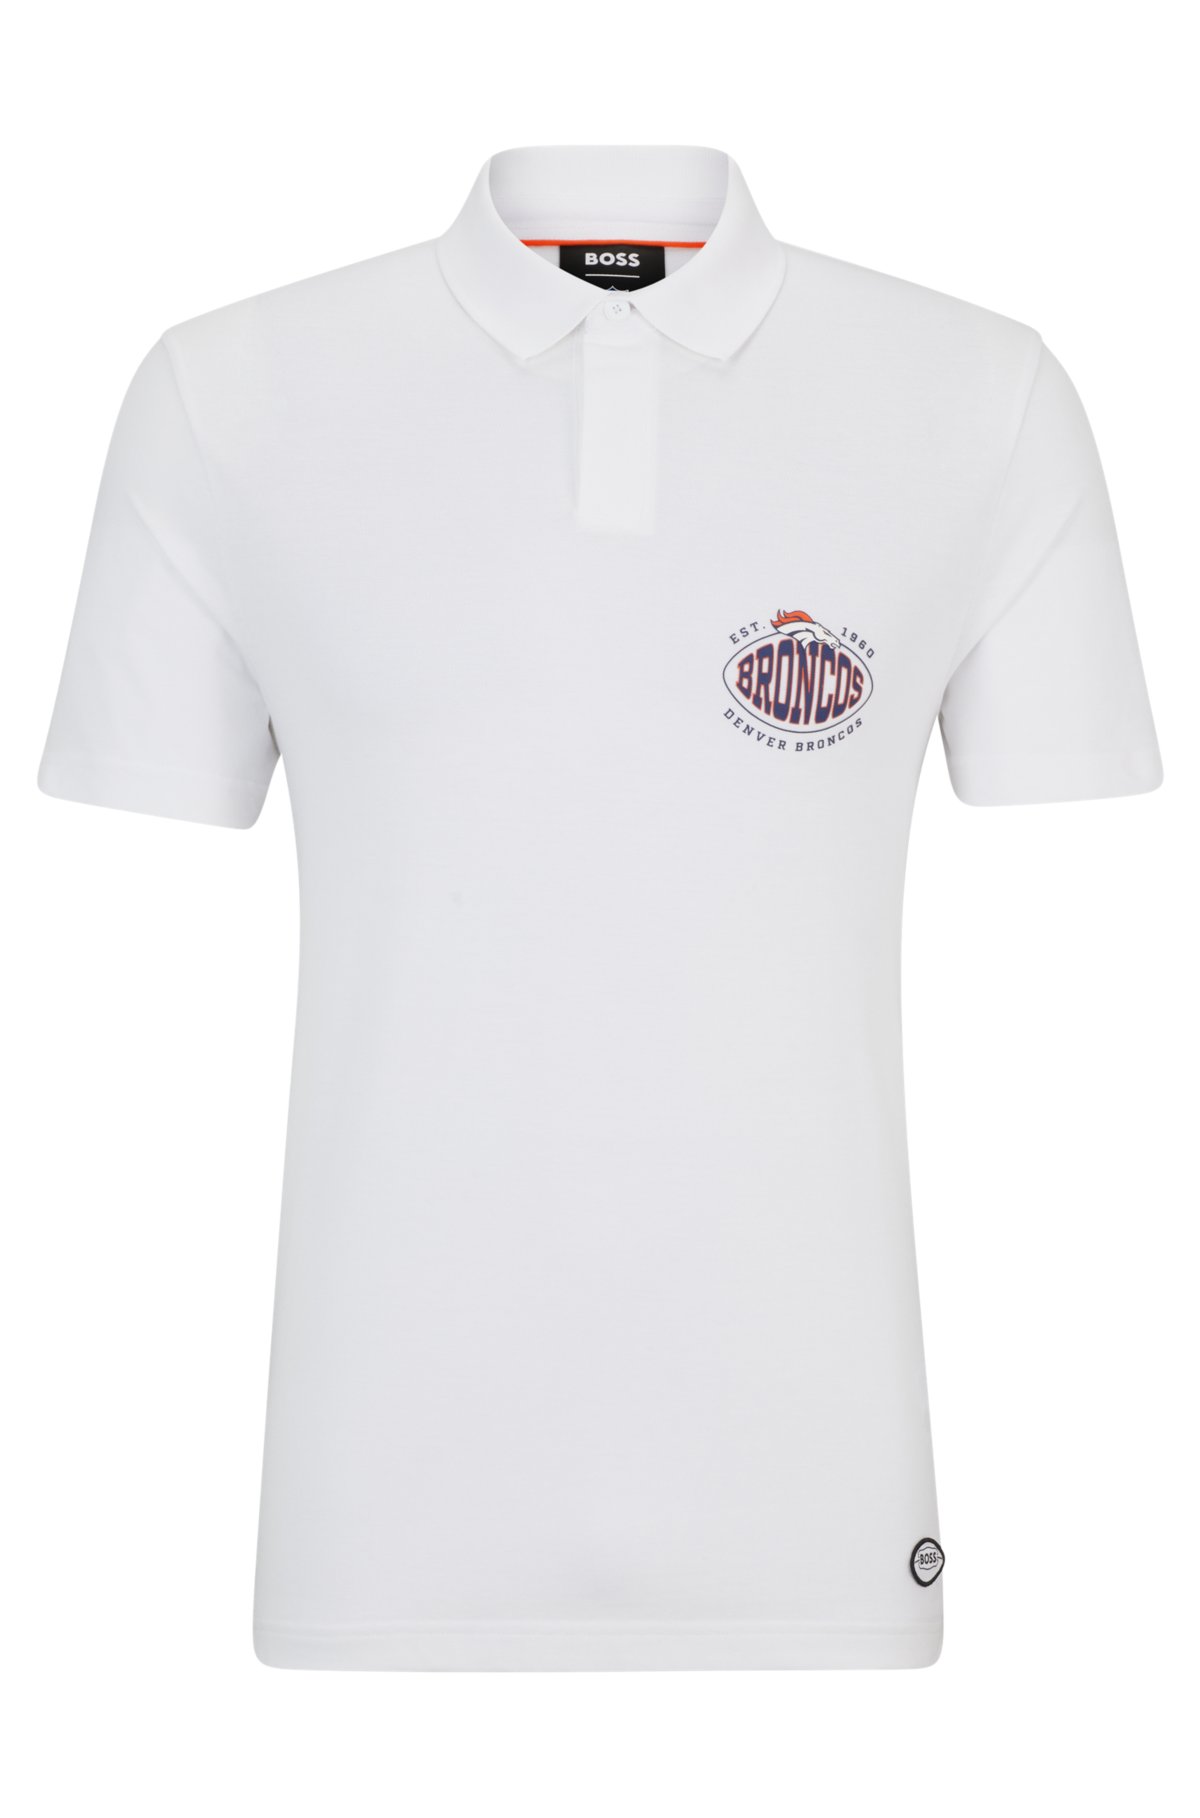 BOSS x NFL cotton-piqué polo shirt with collaborative branding, Broncos